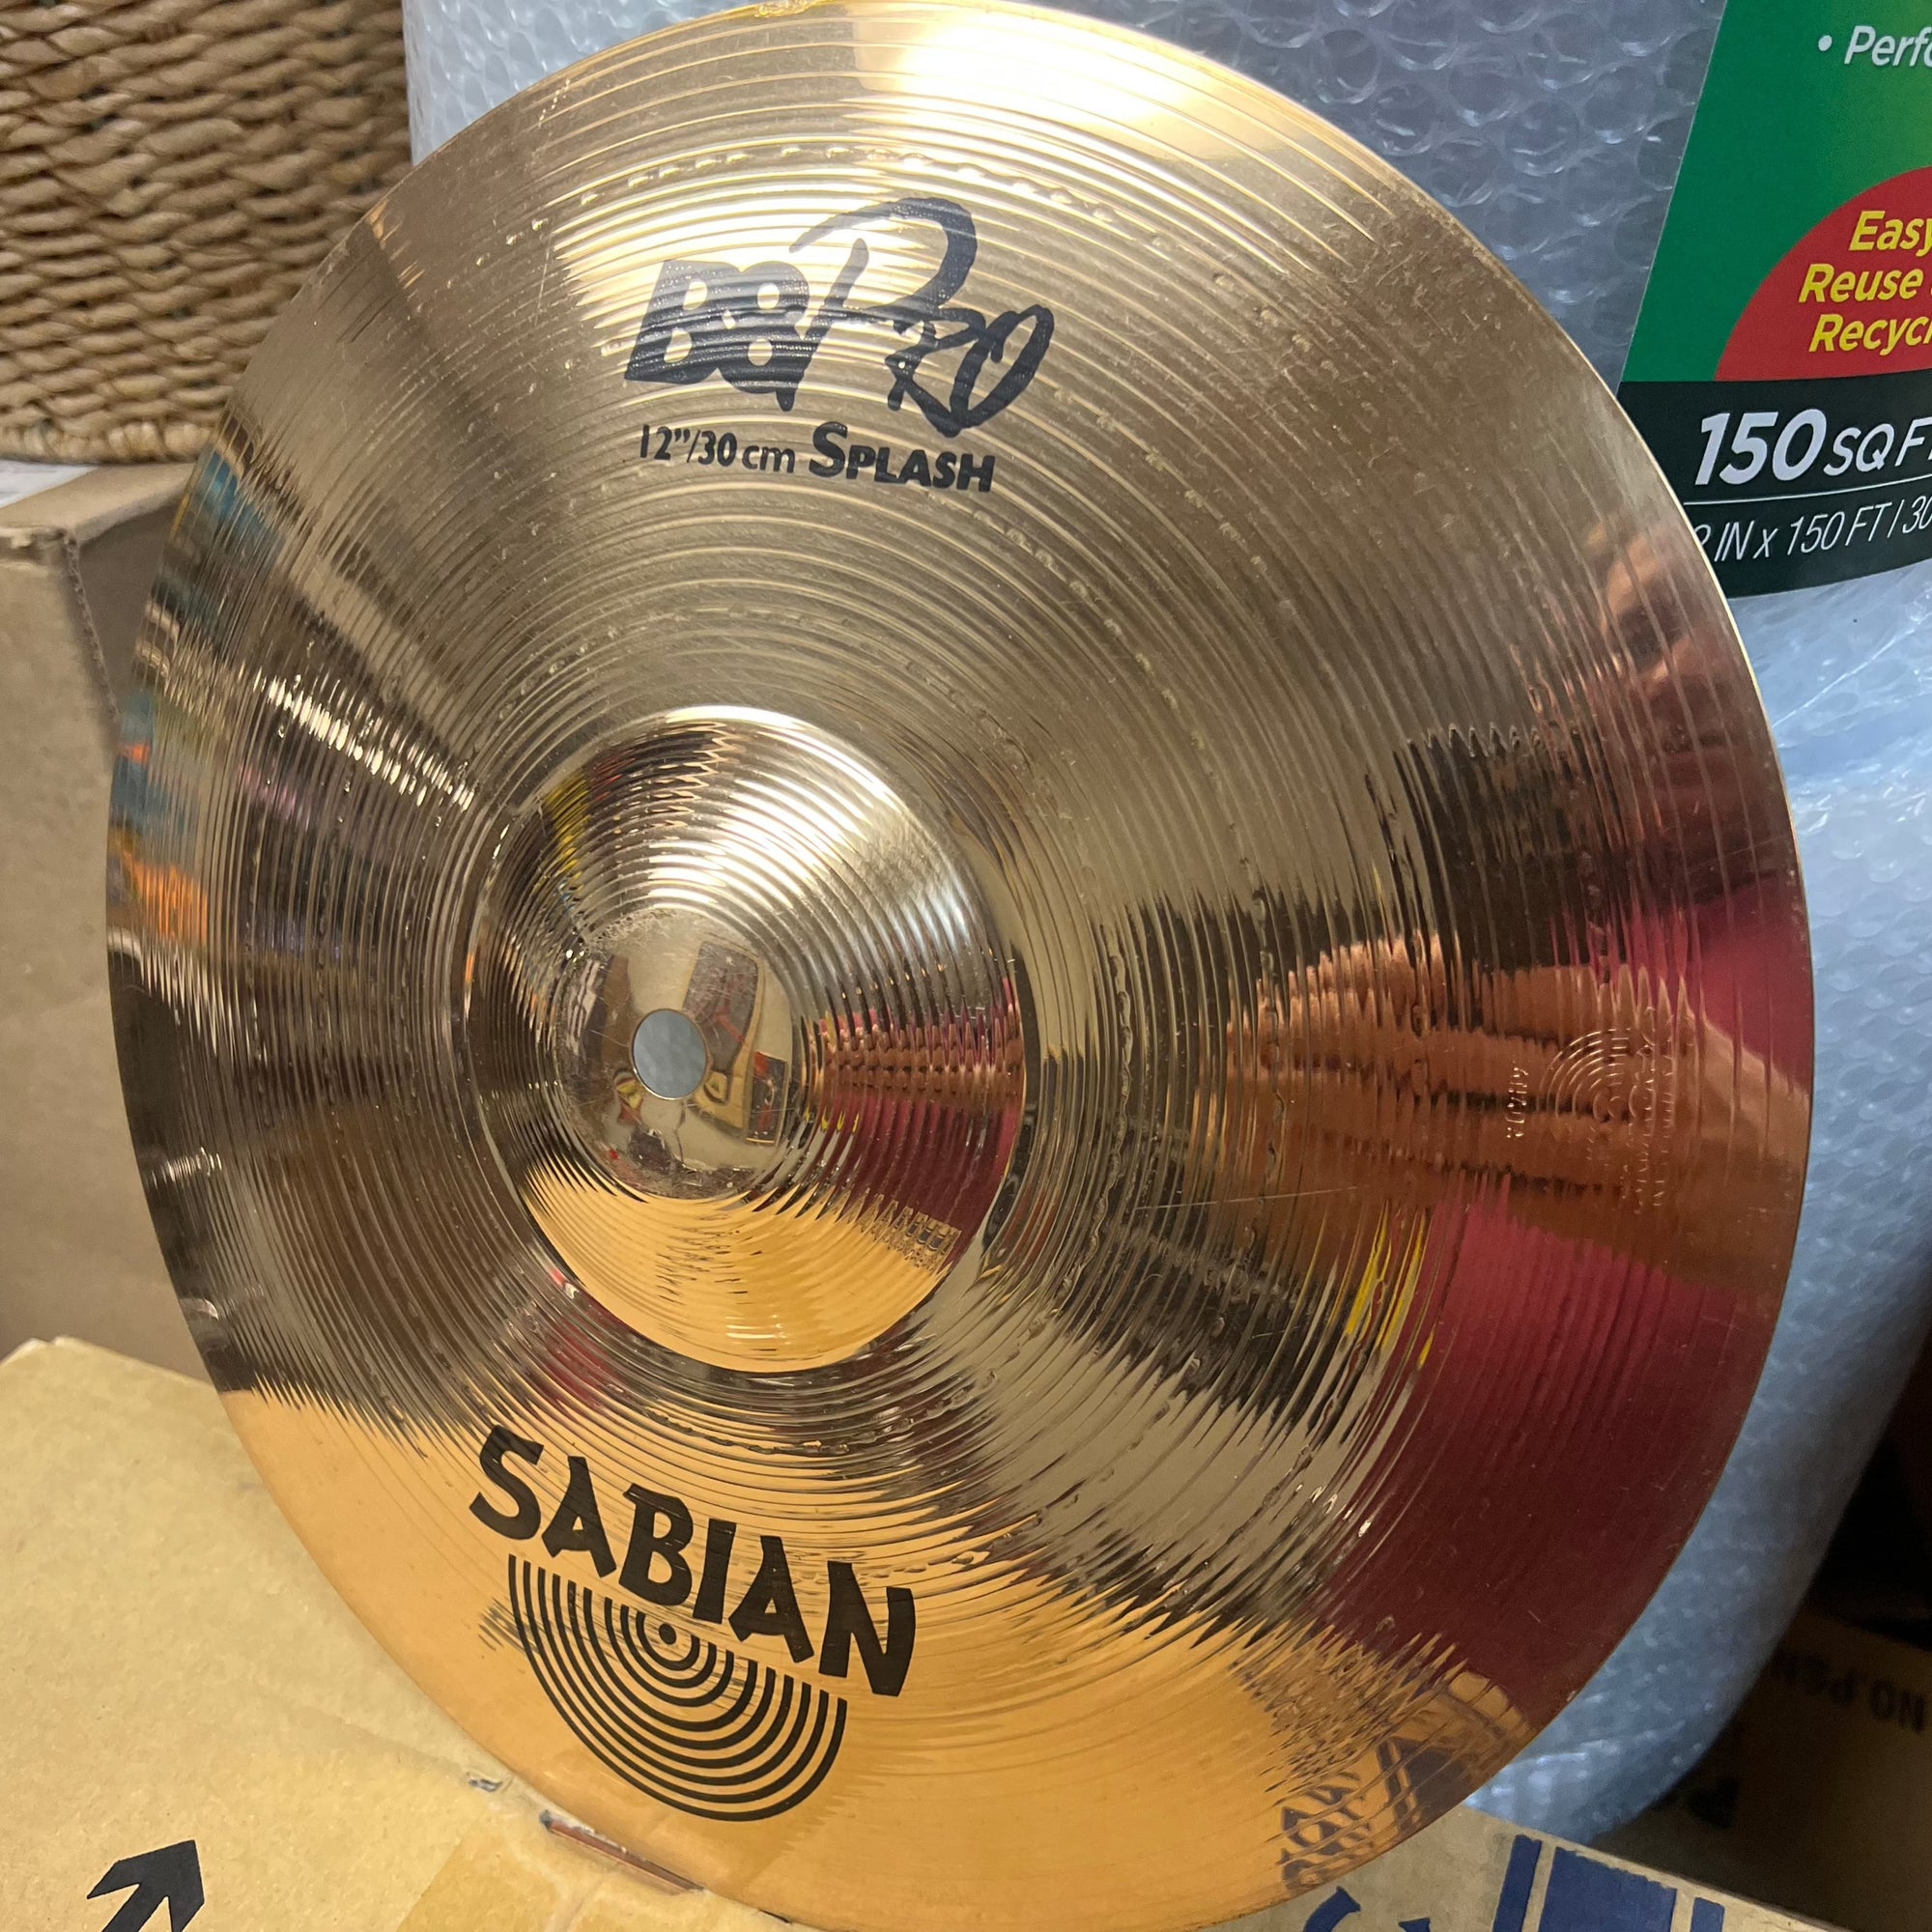 Sabian 12” B8 pro splash Cymbal